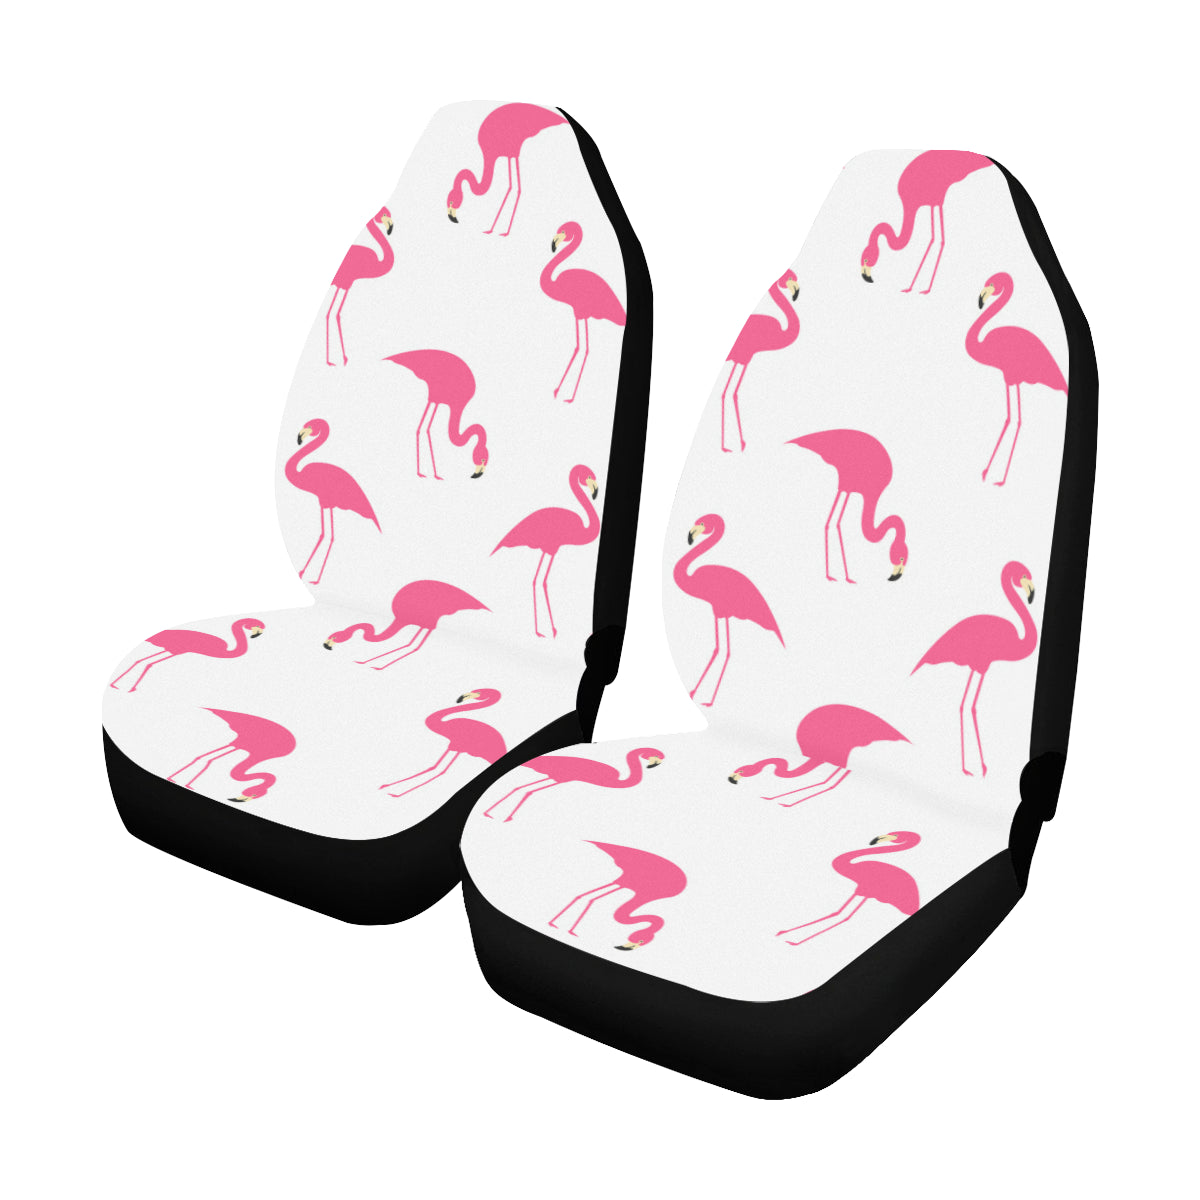 Flamingo Car Seat Covers - Multiple Styles - The Flamingo Shop